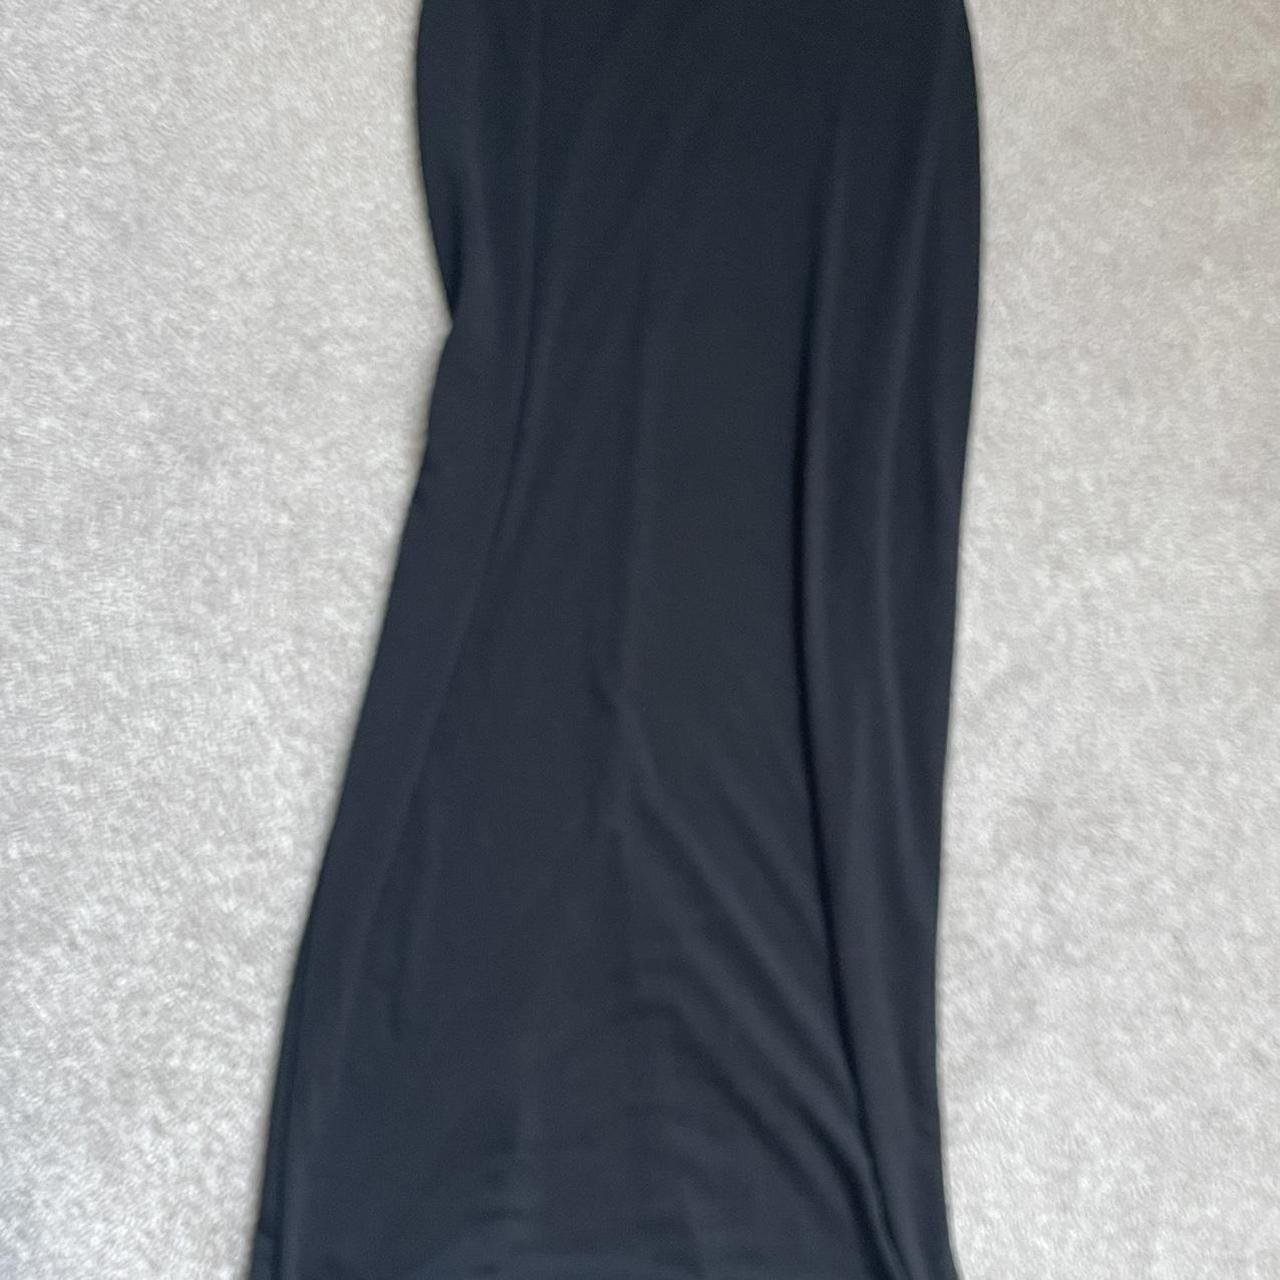 Vintage long black skirt! In good condition!... - Depop